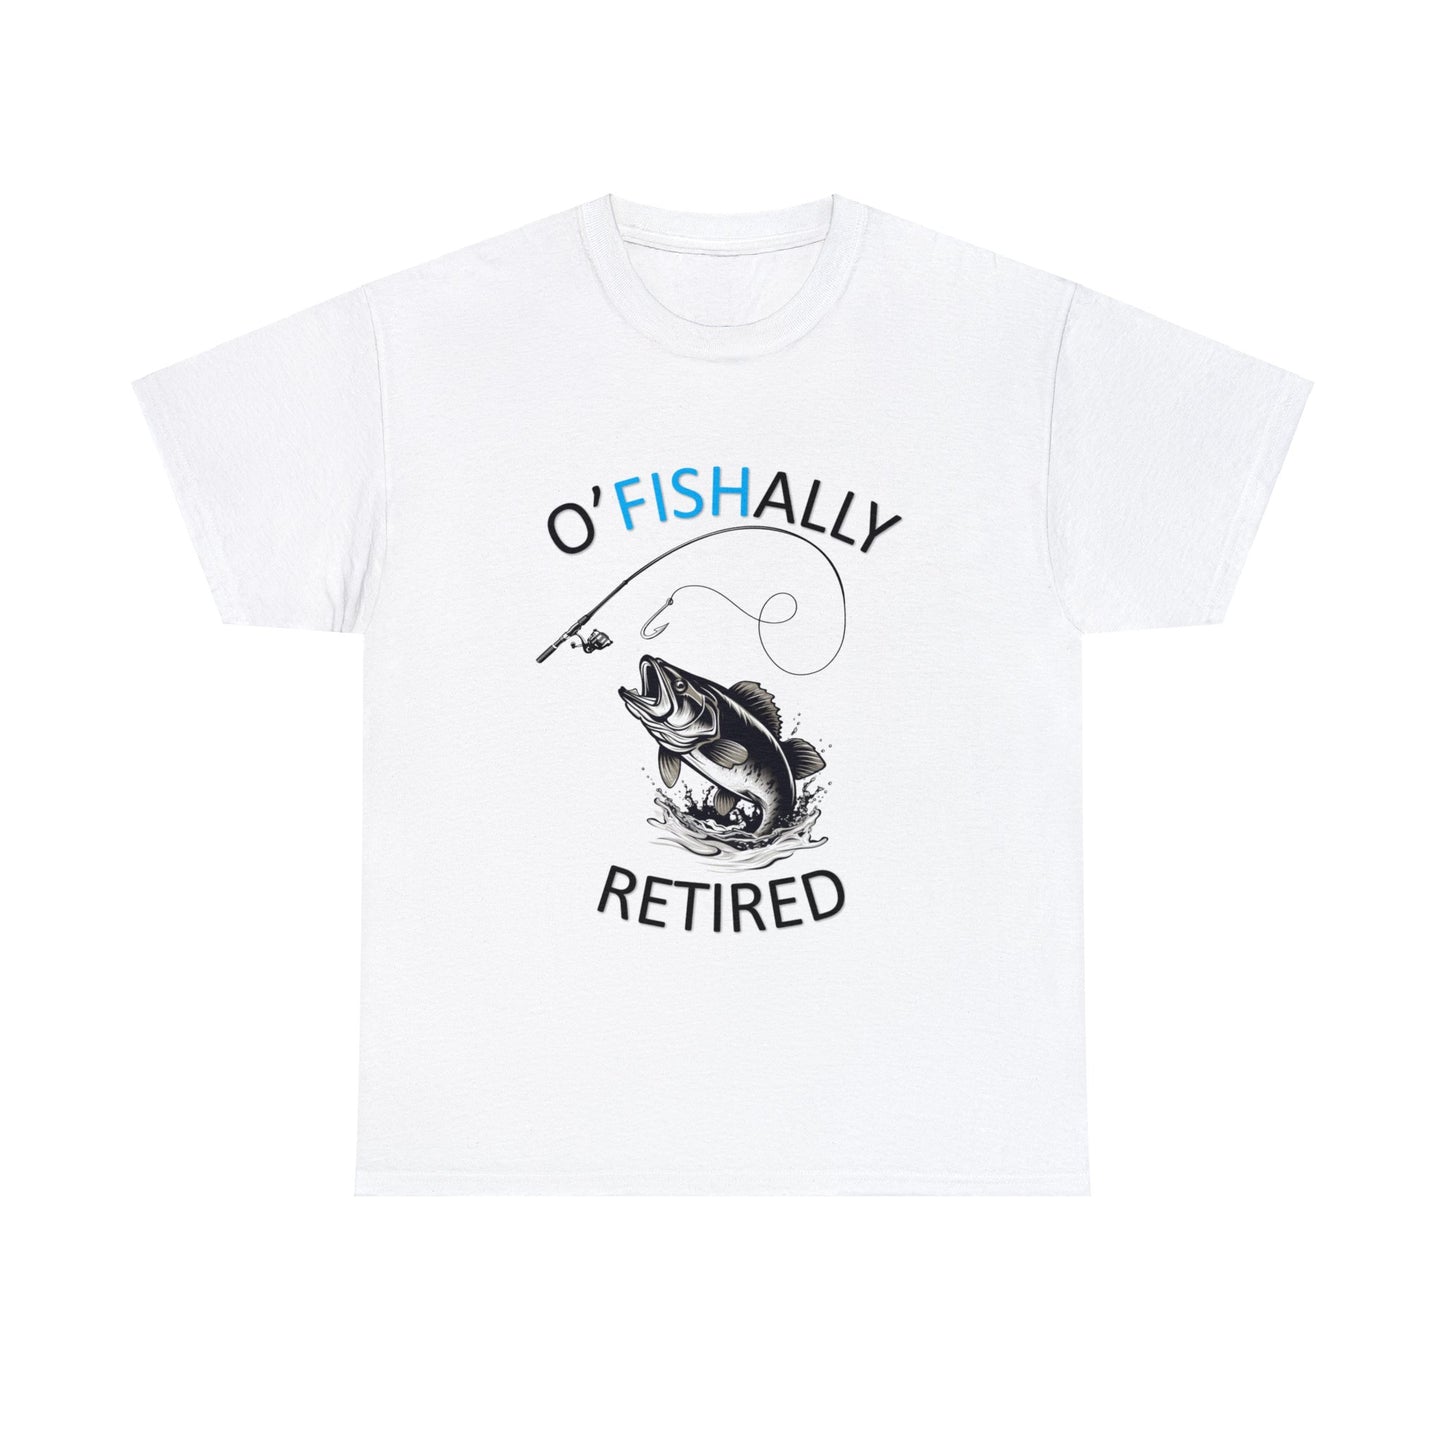 O'Fishally Retired Graphic Tee